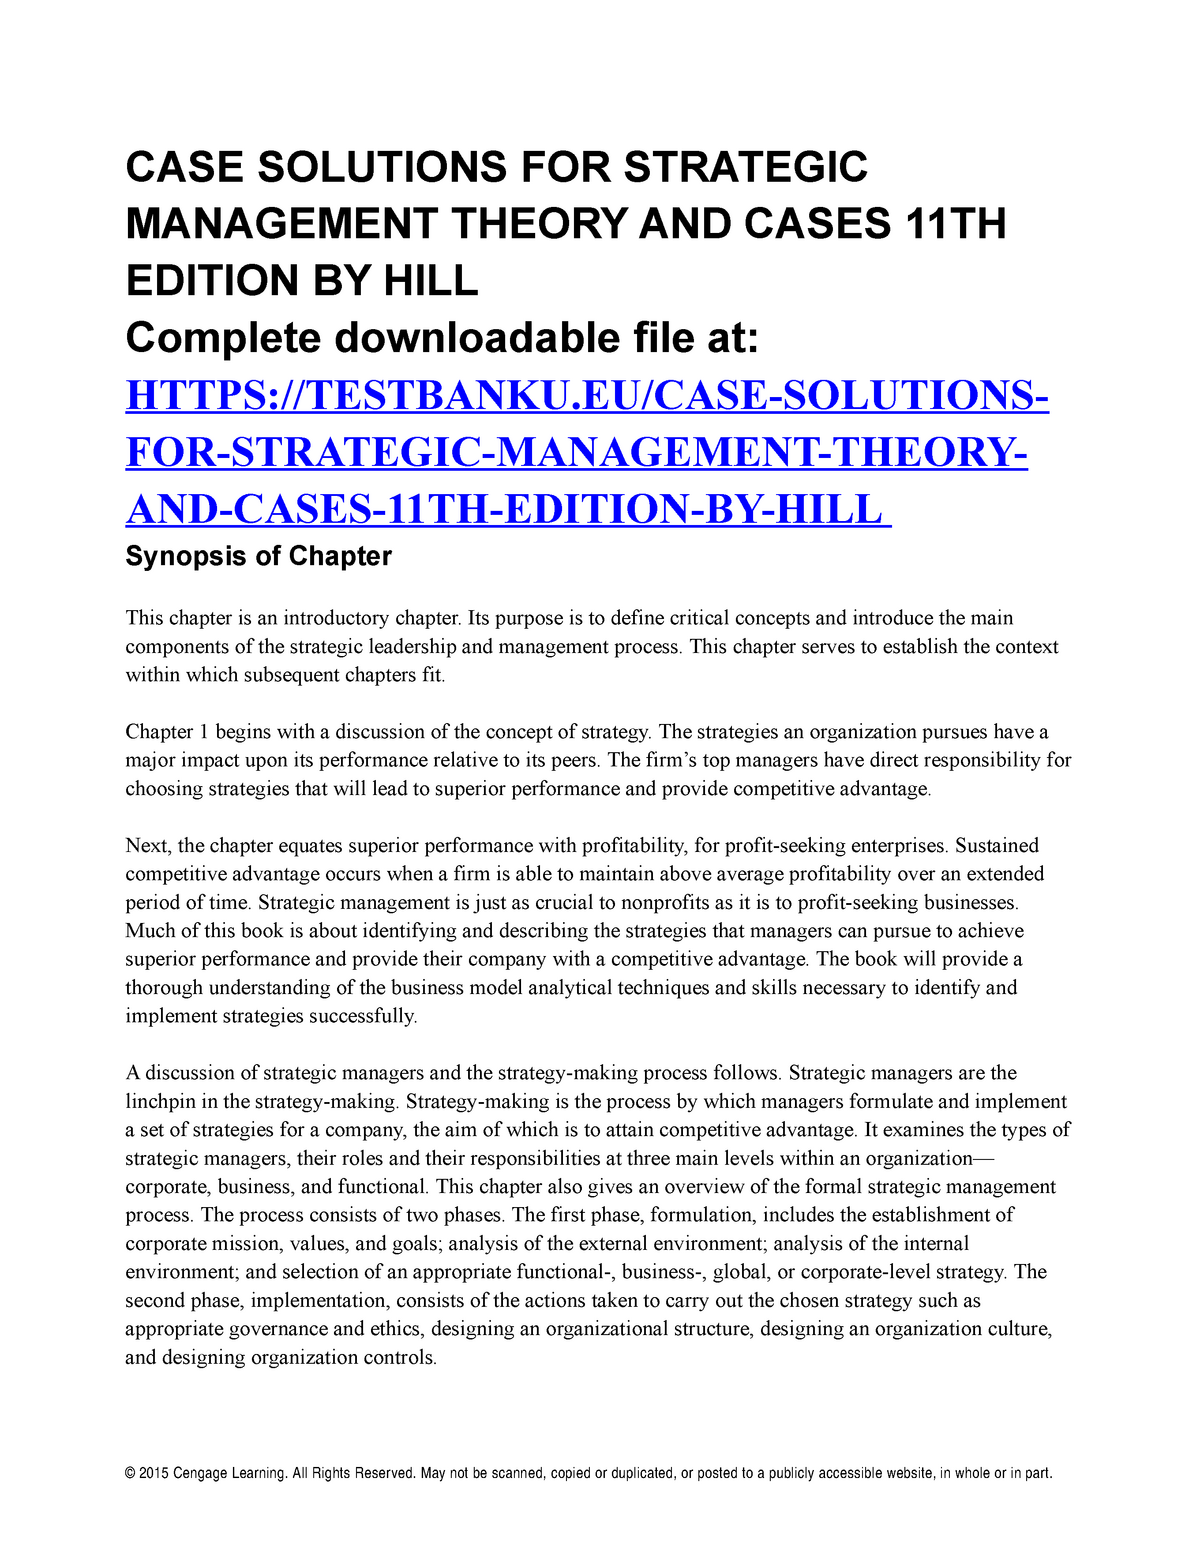 organizational strategic management case study